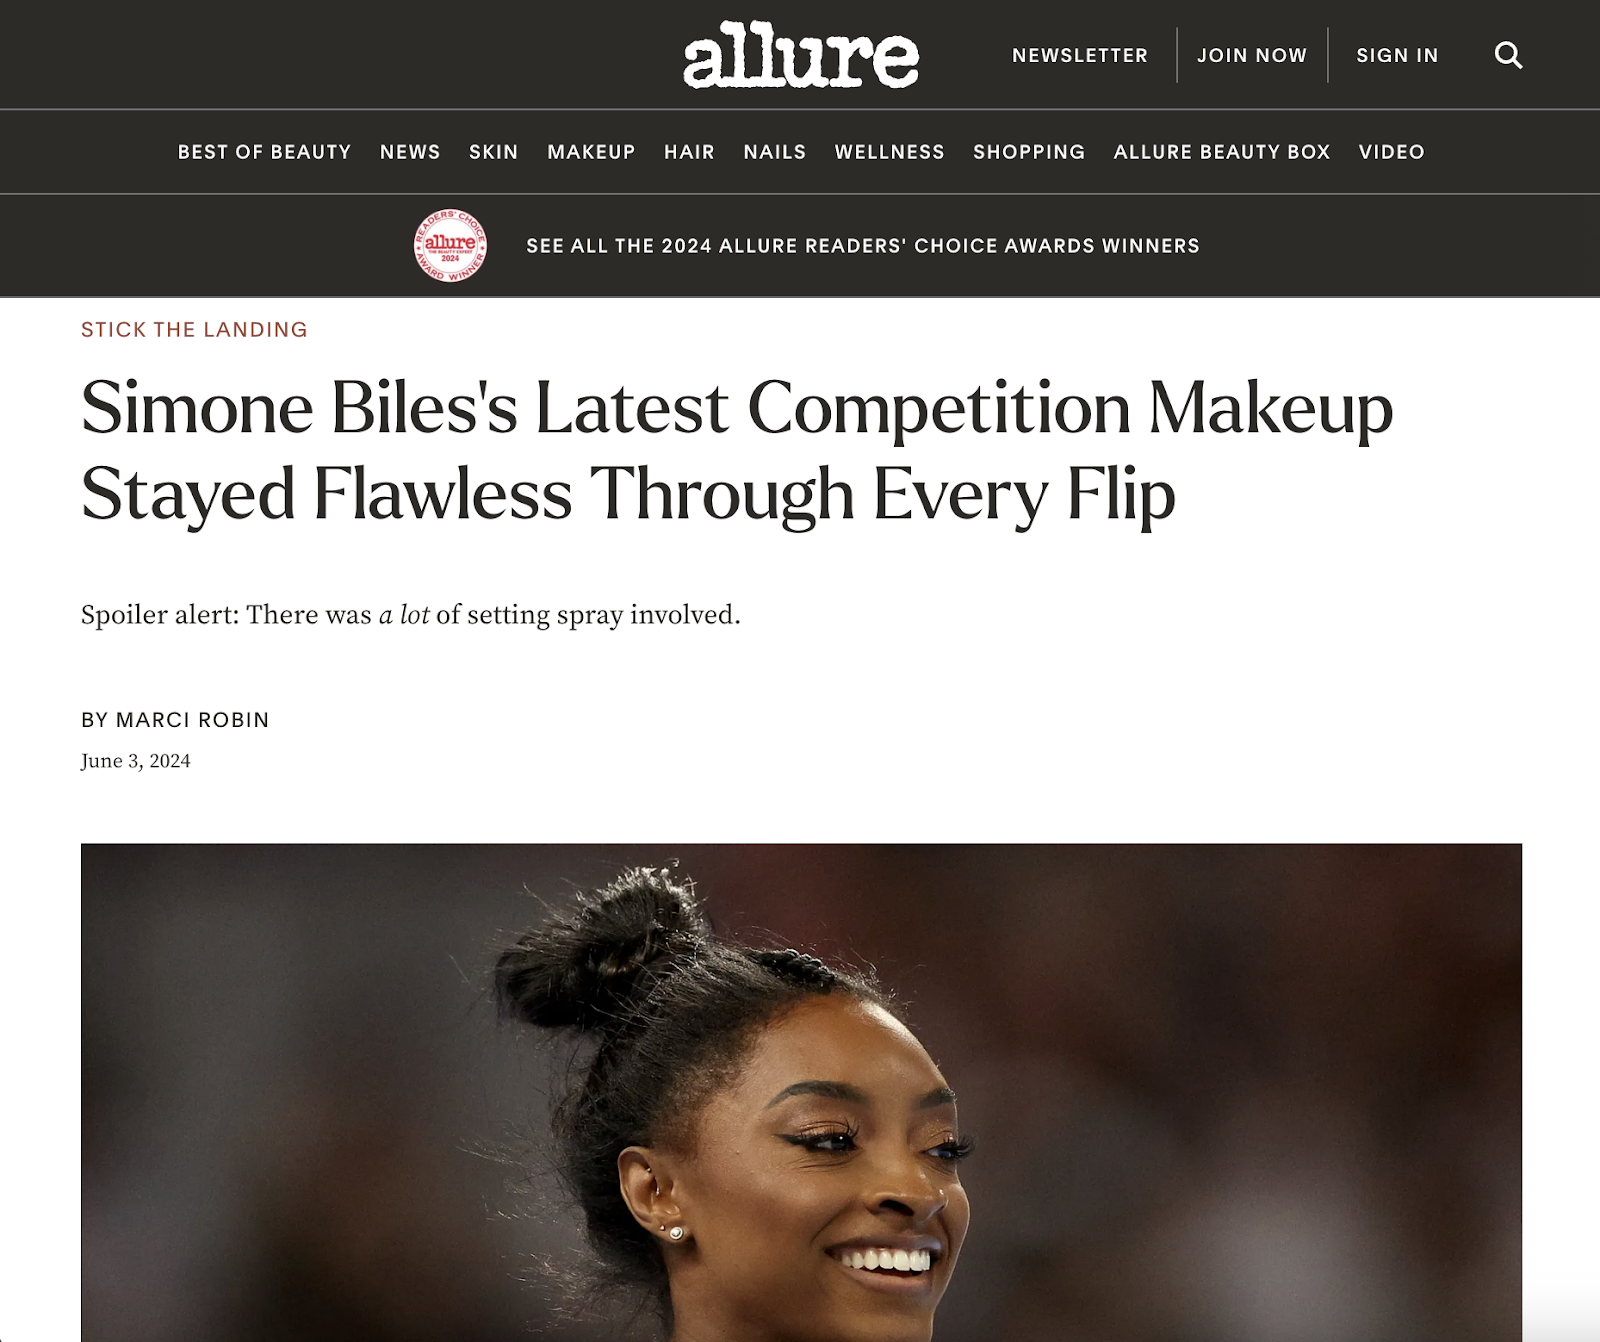 Allur's non-ymyl article on Simone Biles's makeup routine